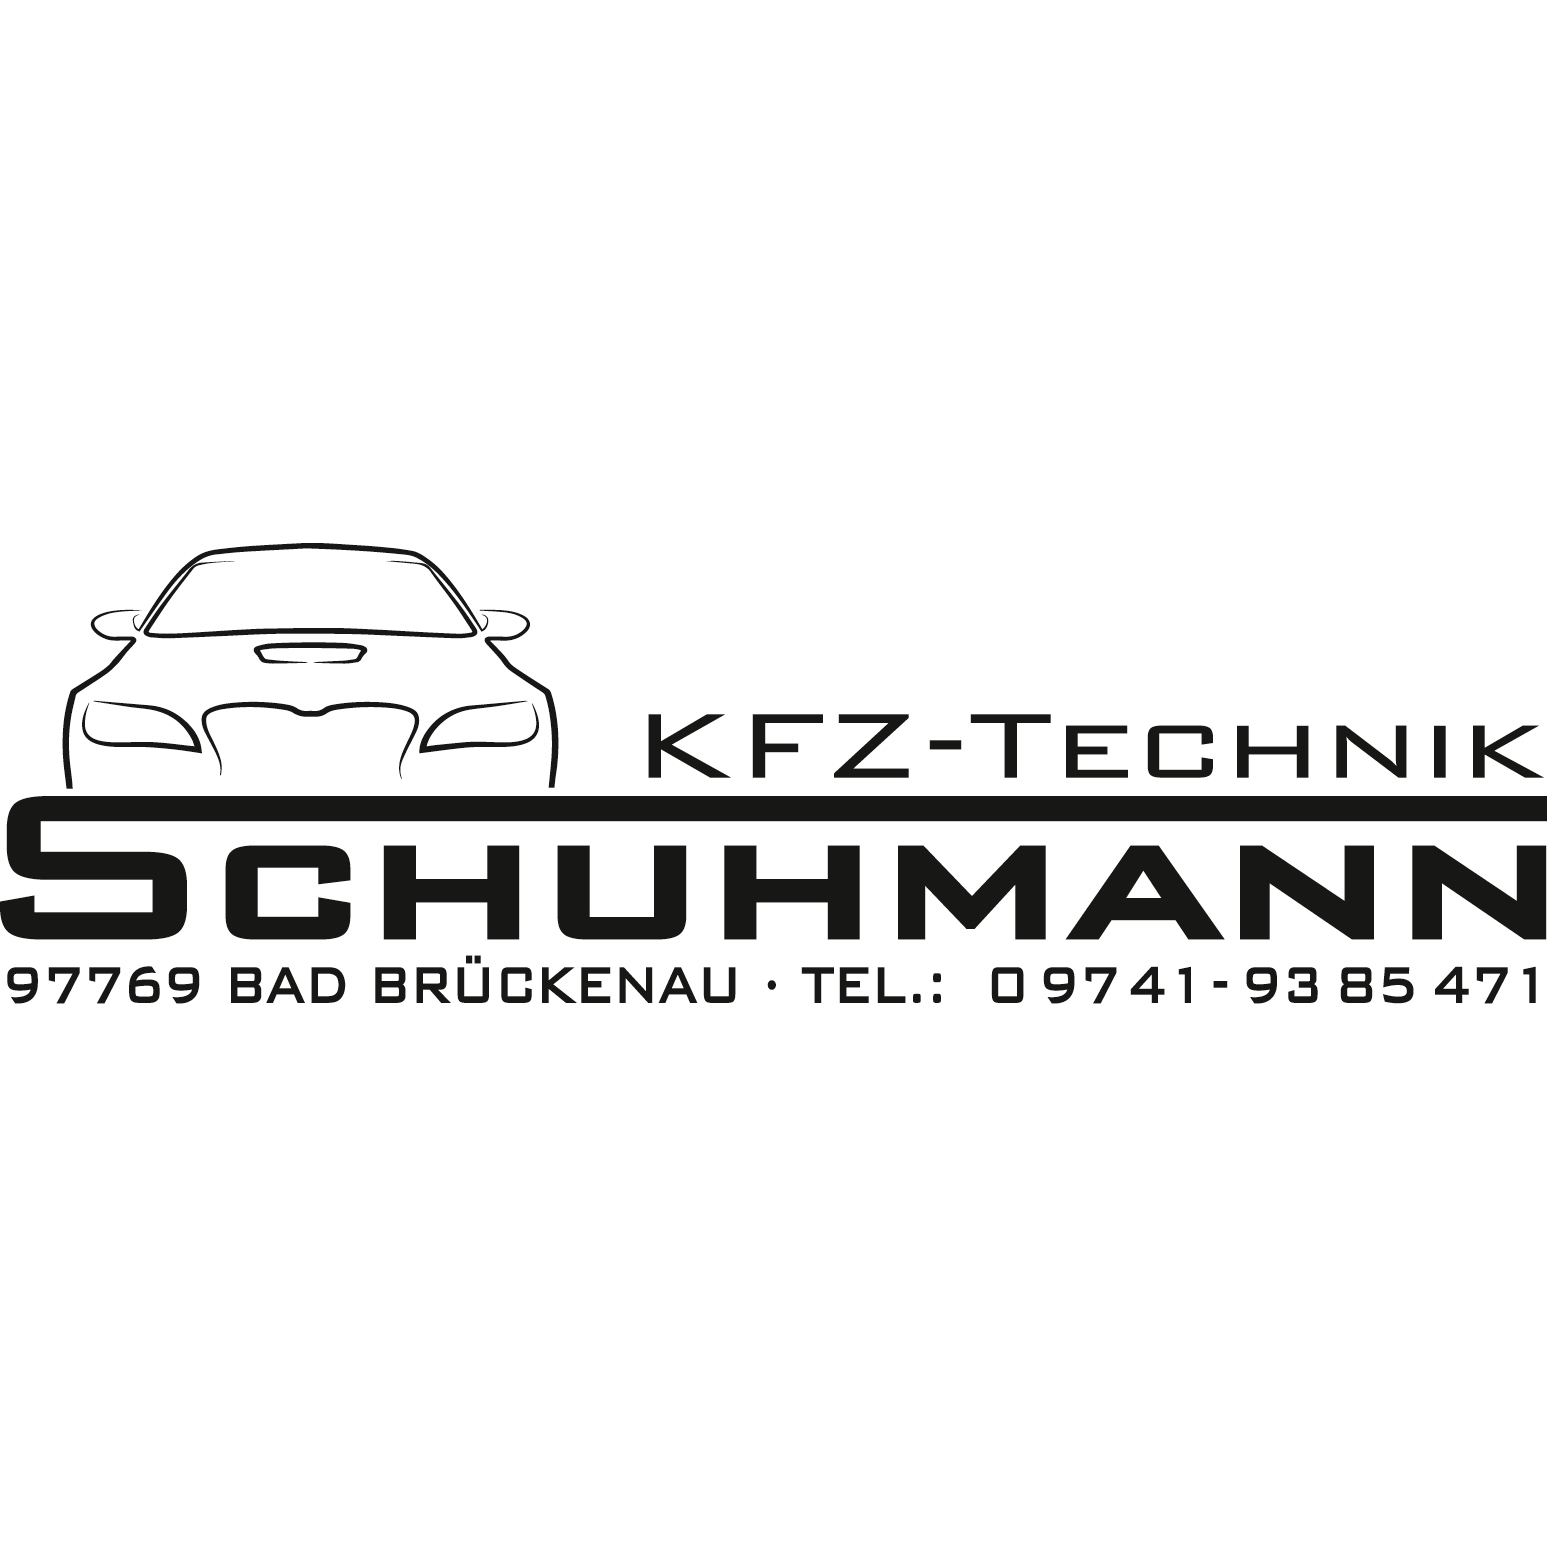 KFZ Technik Schuhmann in Bad Brückenau - Logo